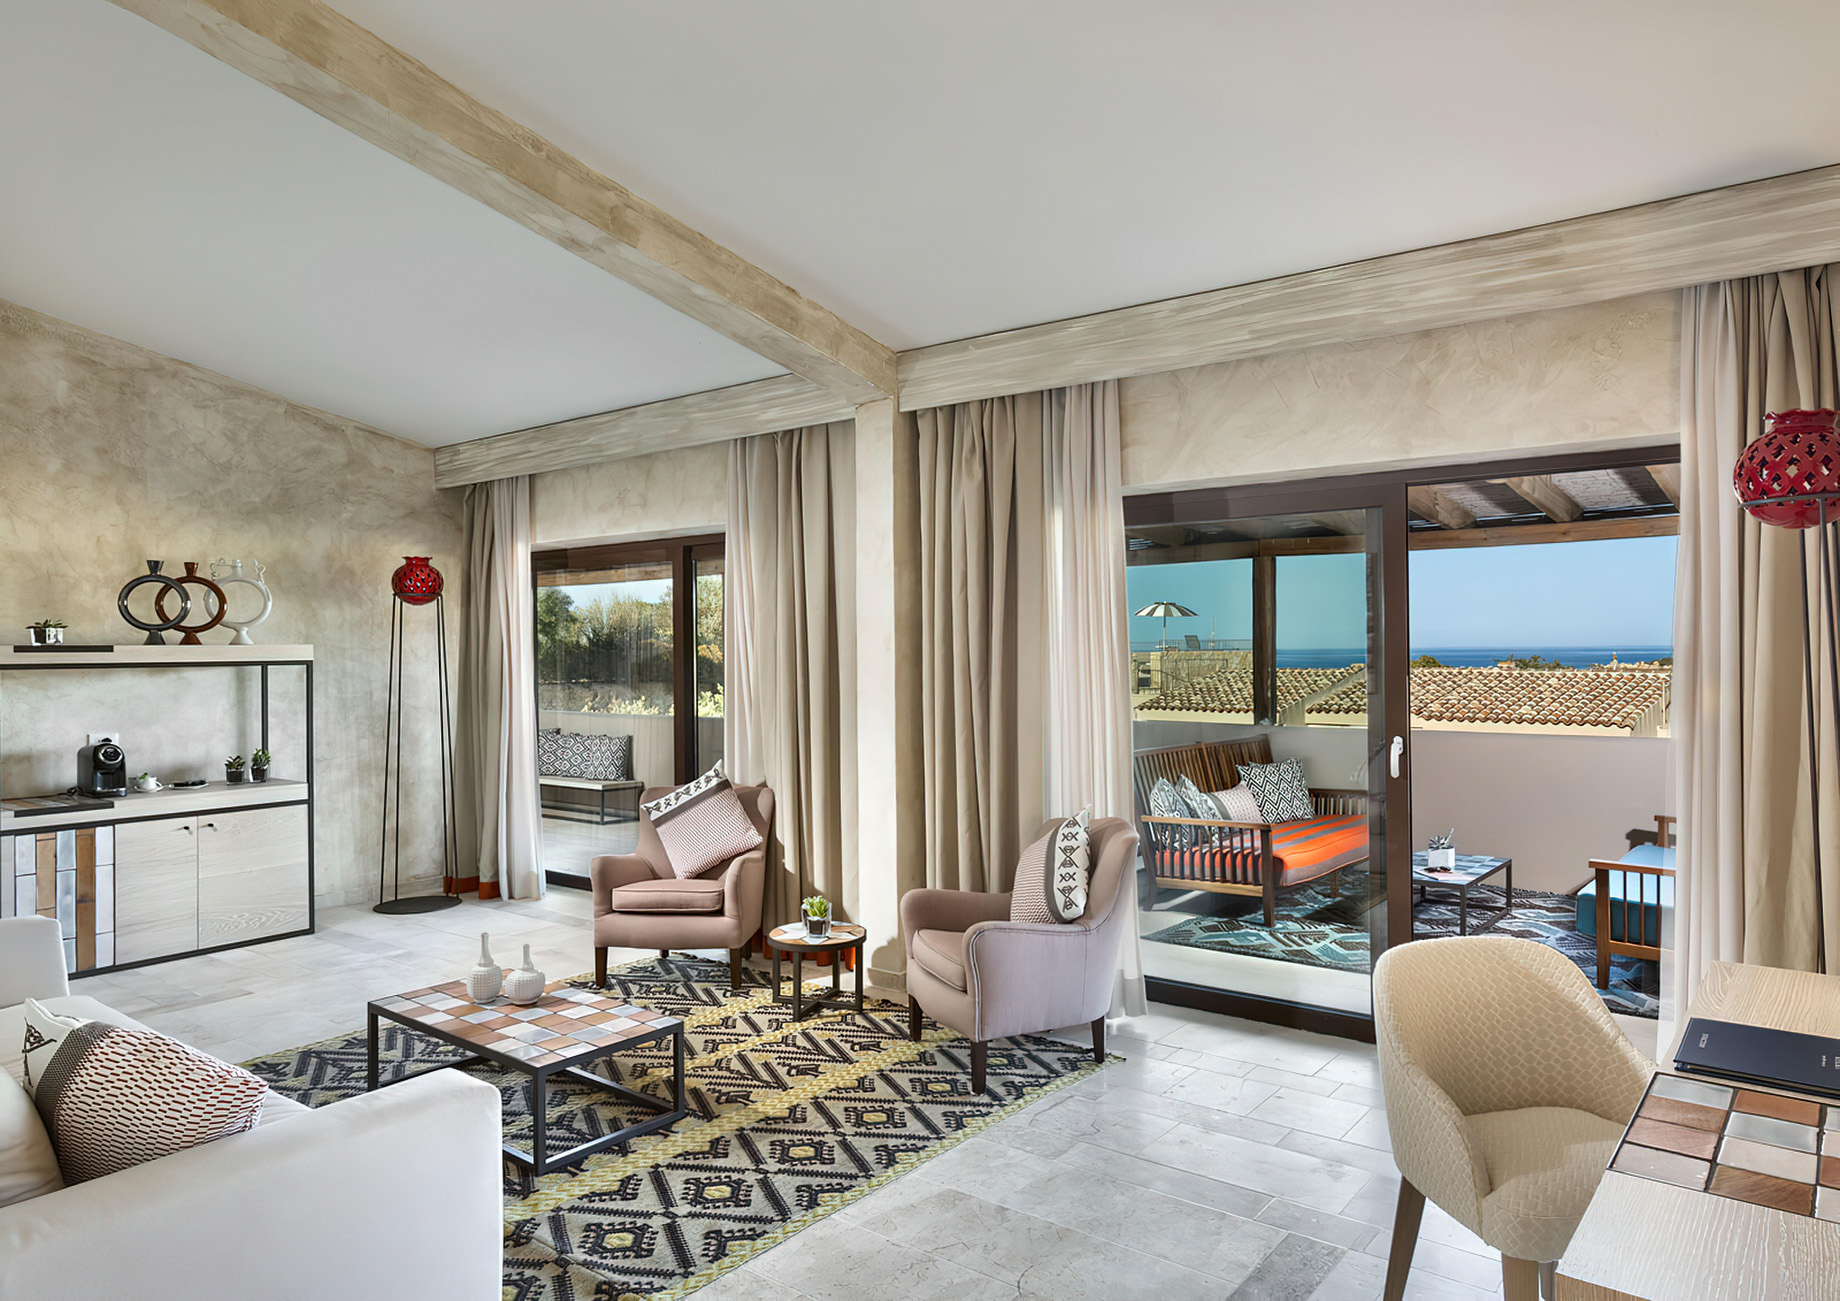 Baglioni Resort Sardinia - San Teodoro, Sardegna, Italy - Tavolara Suite Living Room